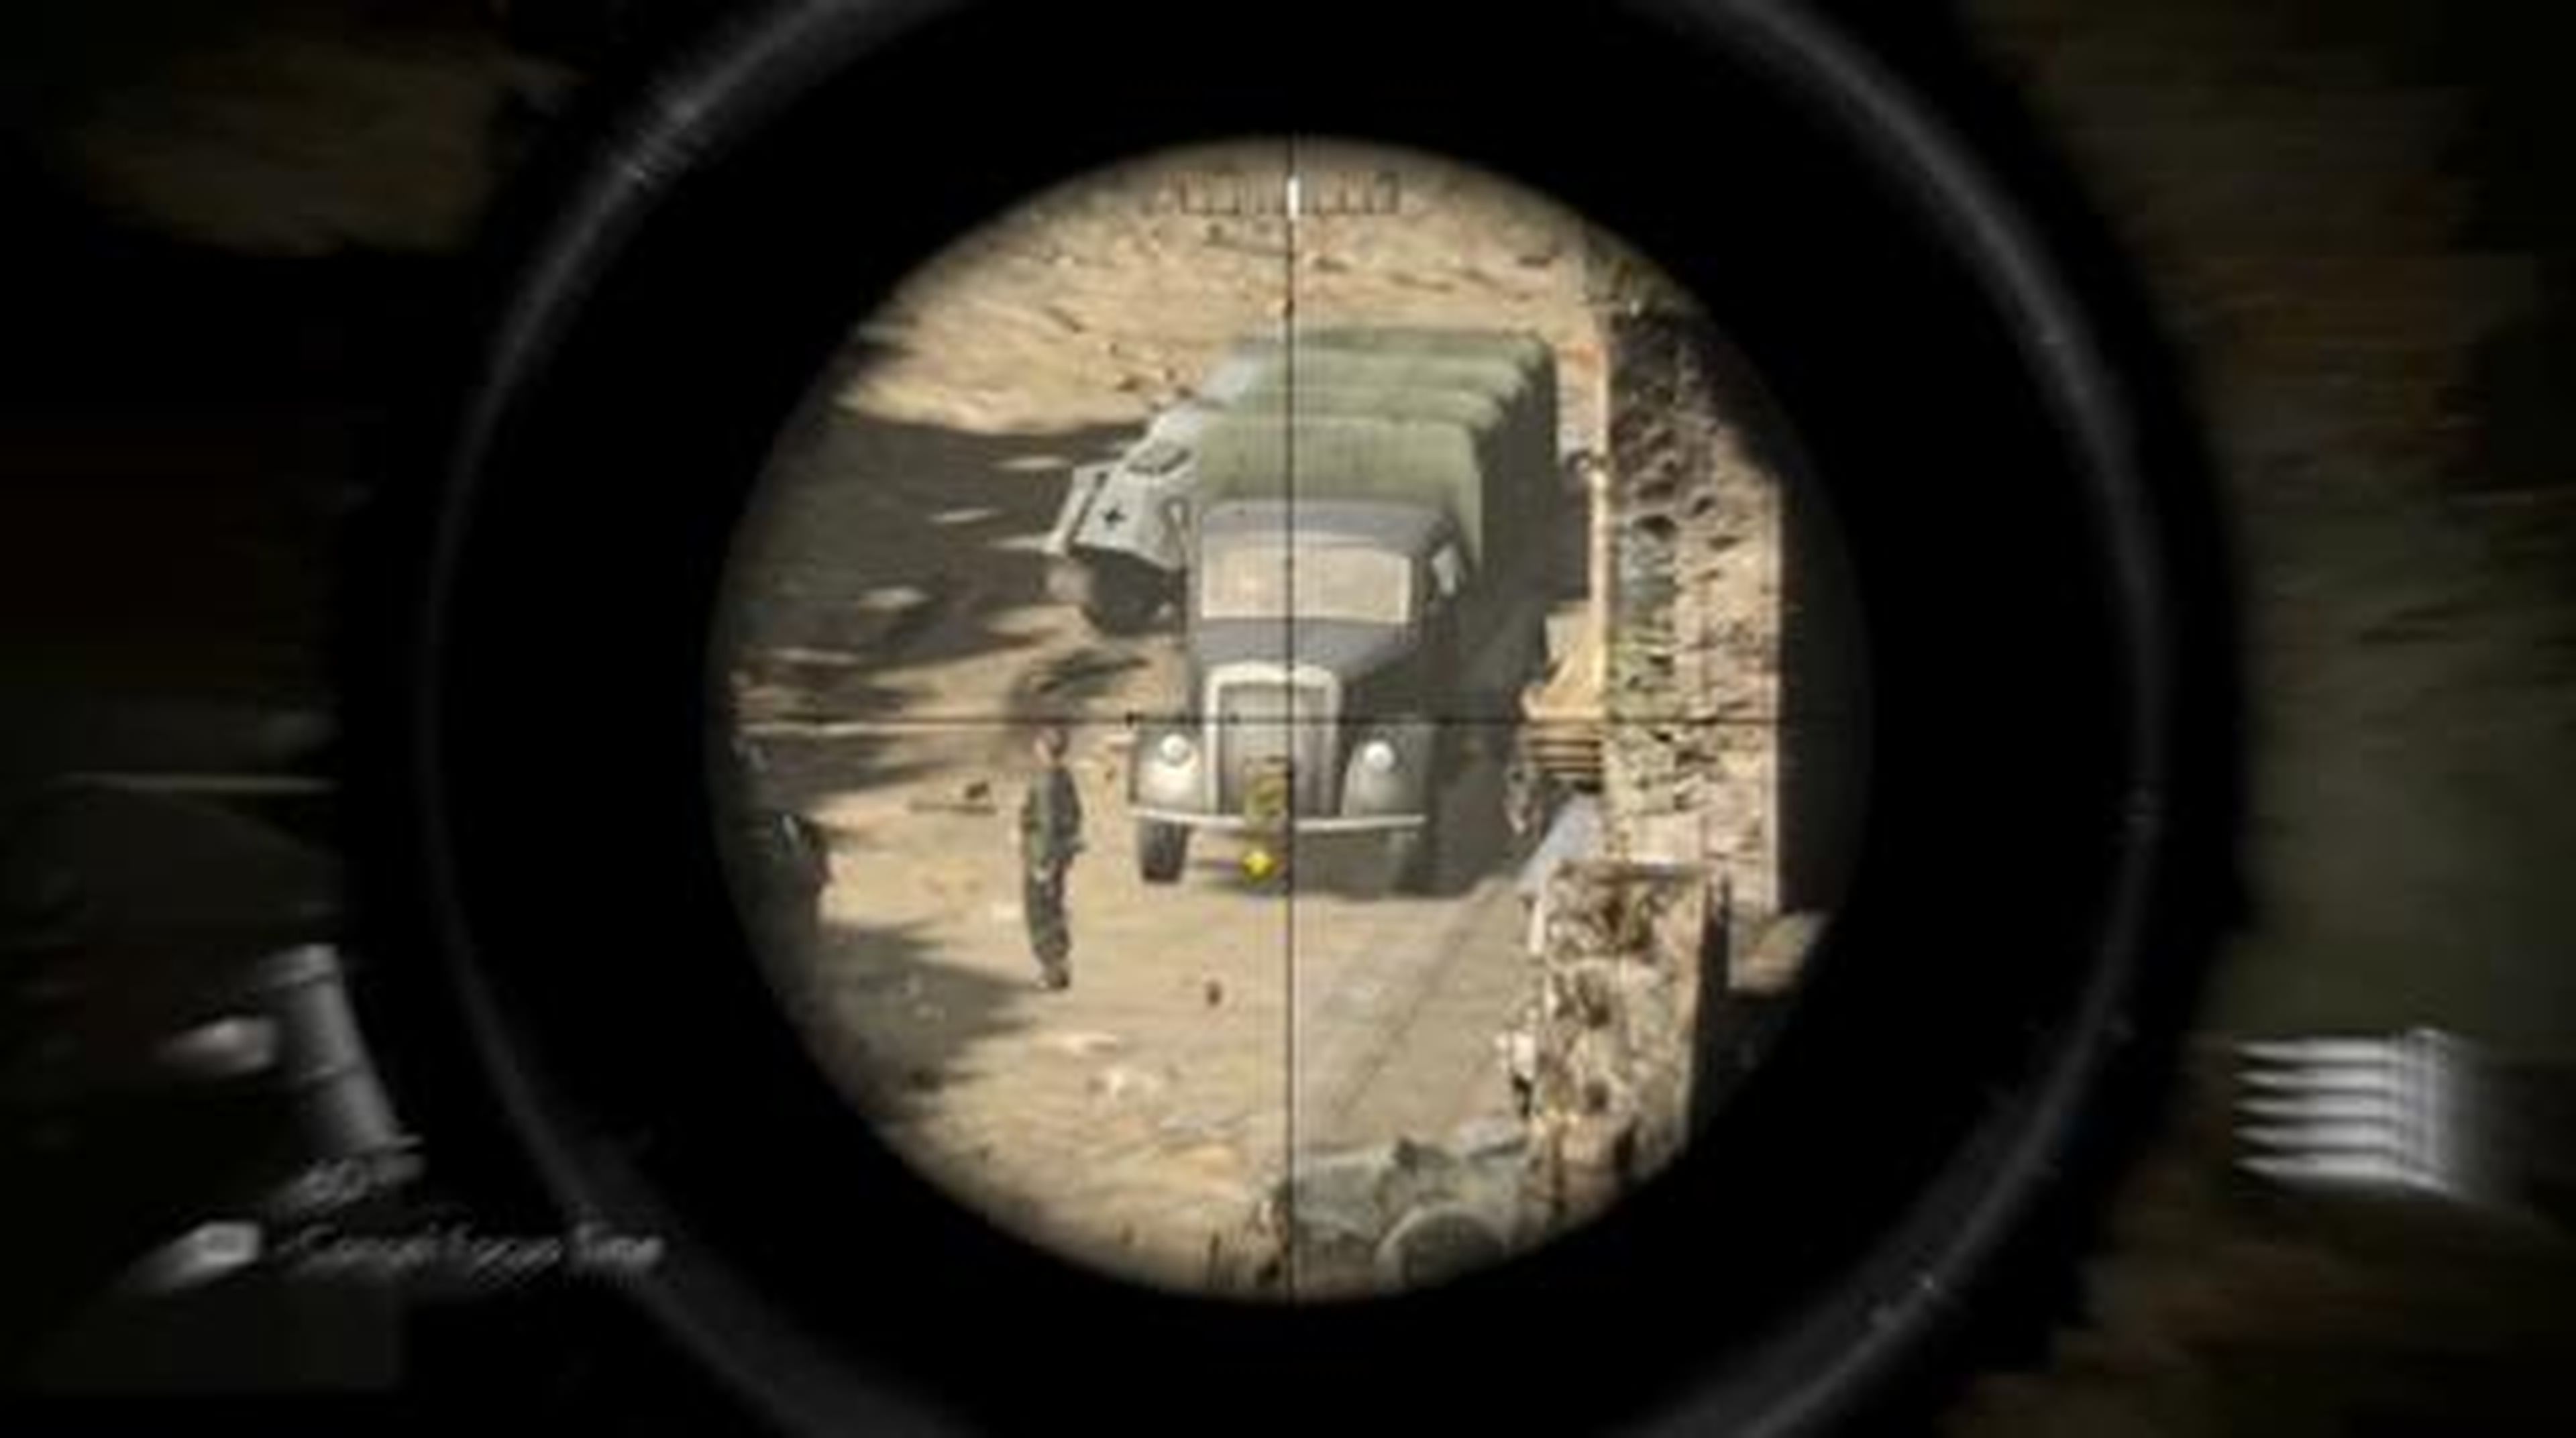 Sniper Elite V2 - Kill Cam of the Week 2 en HobbyNews.es